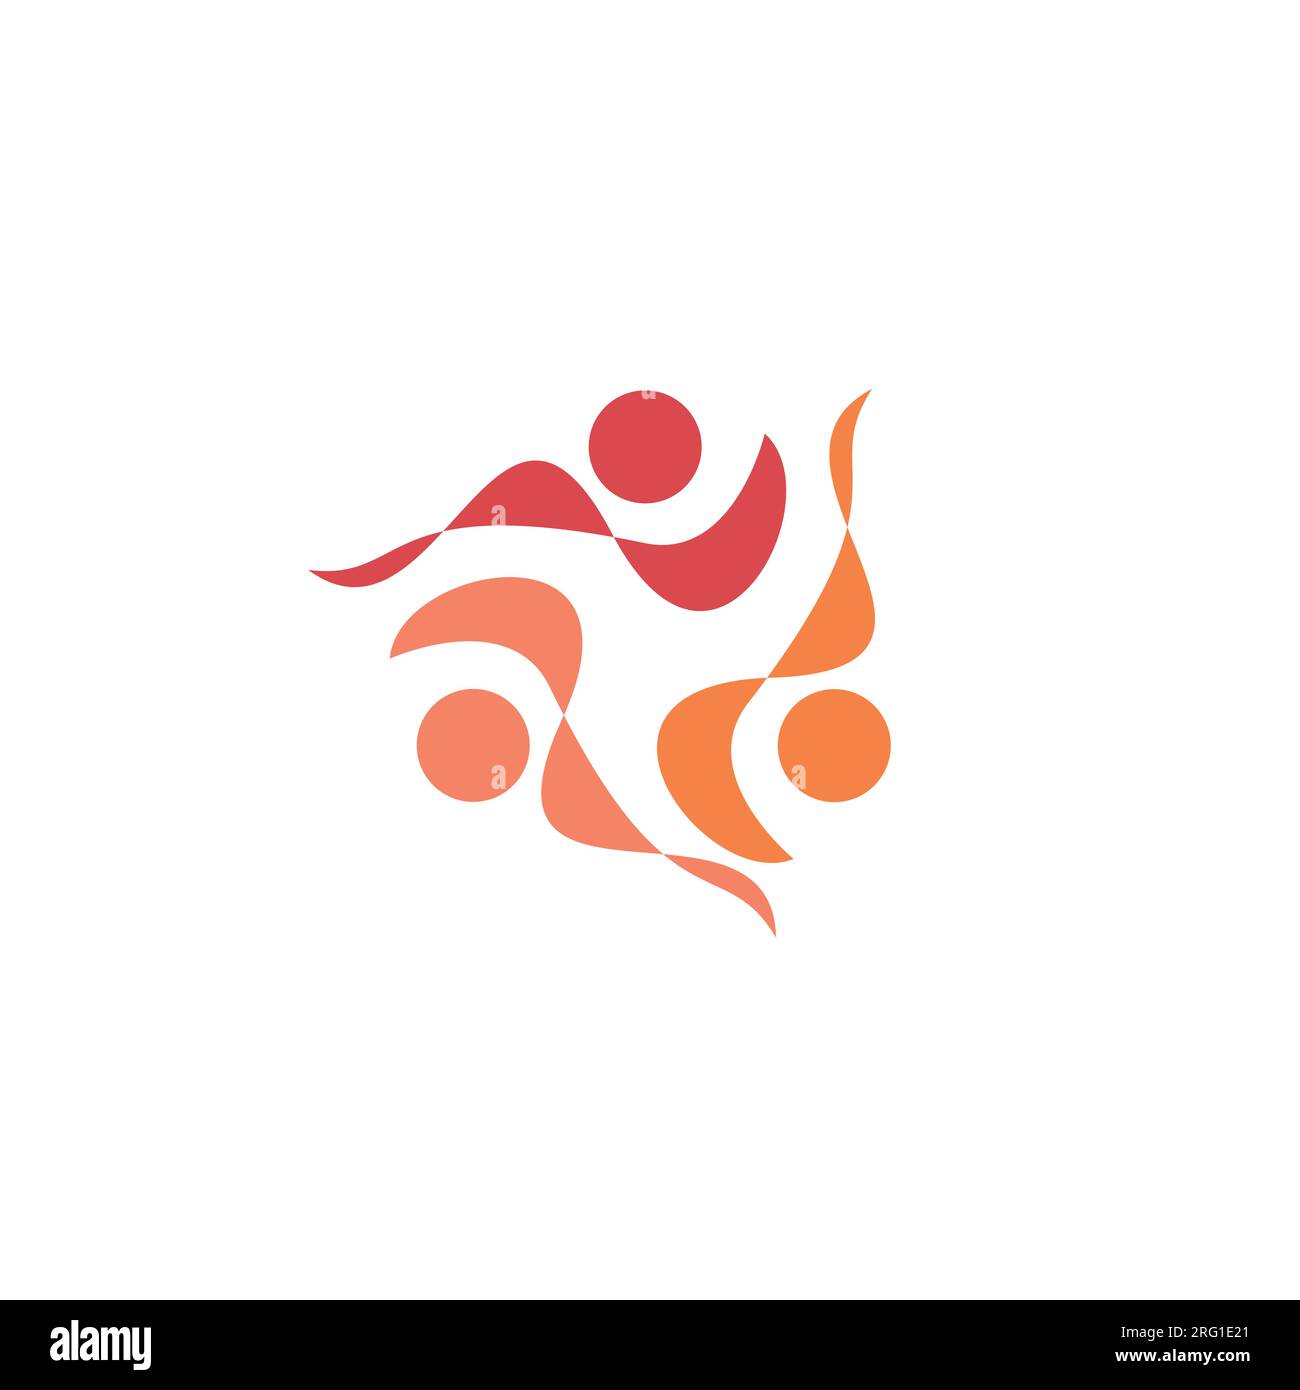 Abstract Human Team Logo. Usable for Business and Teamwork Logos Stock Vector